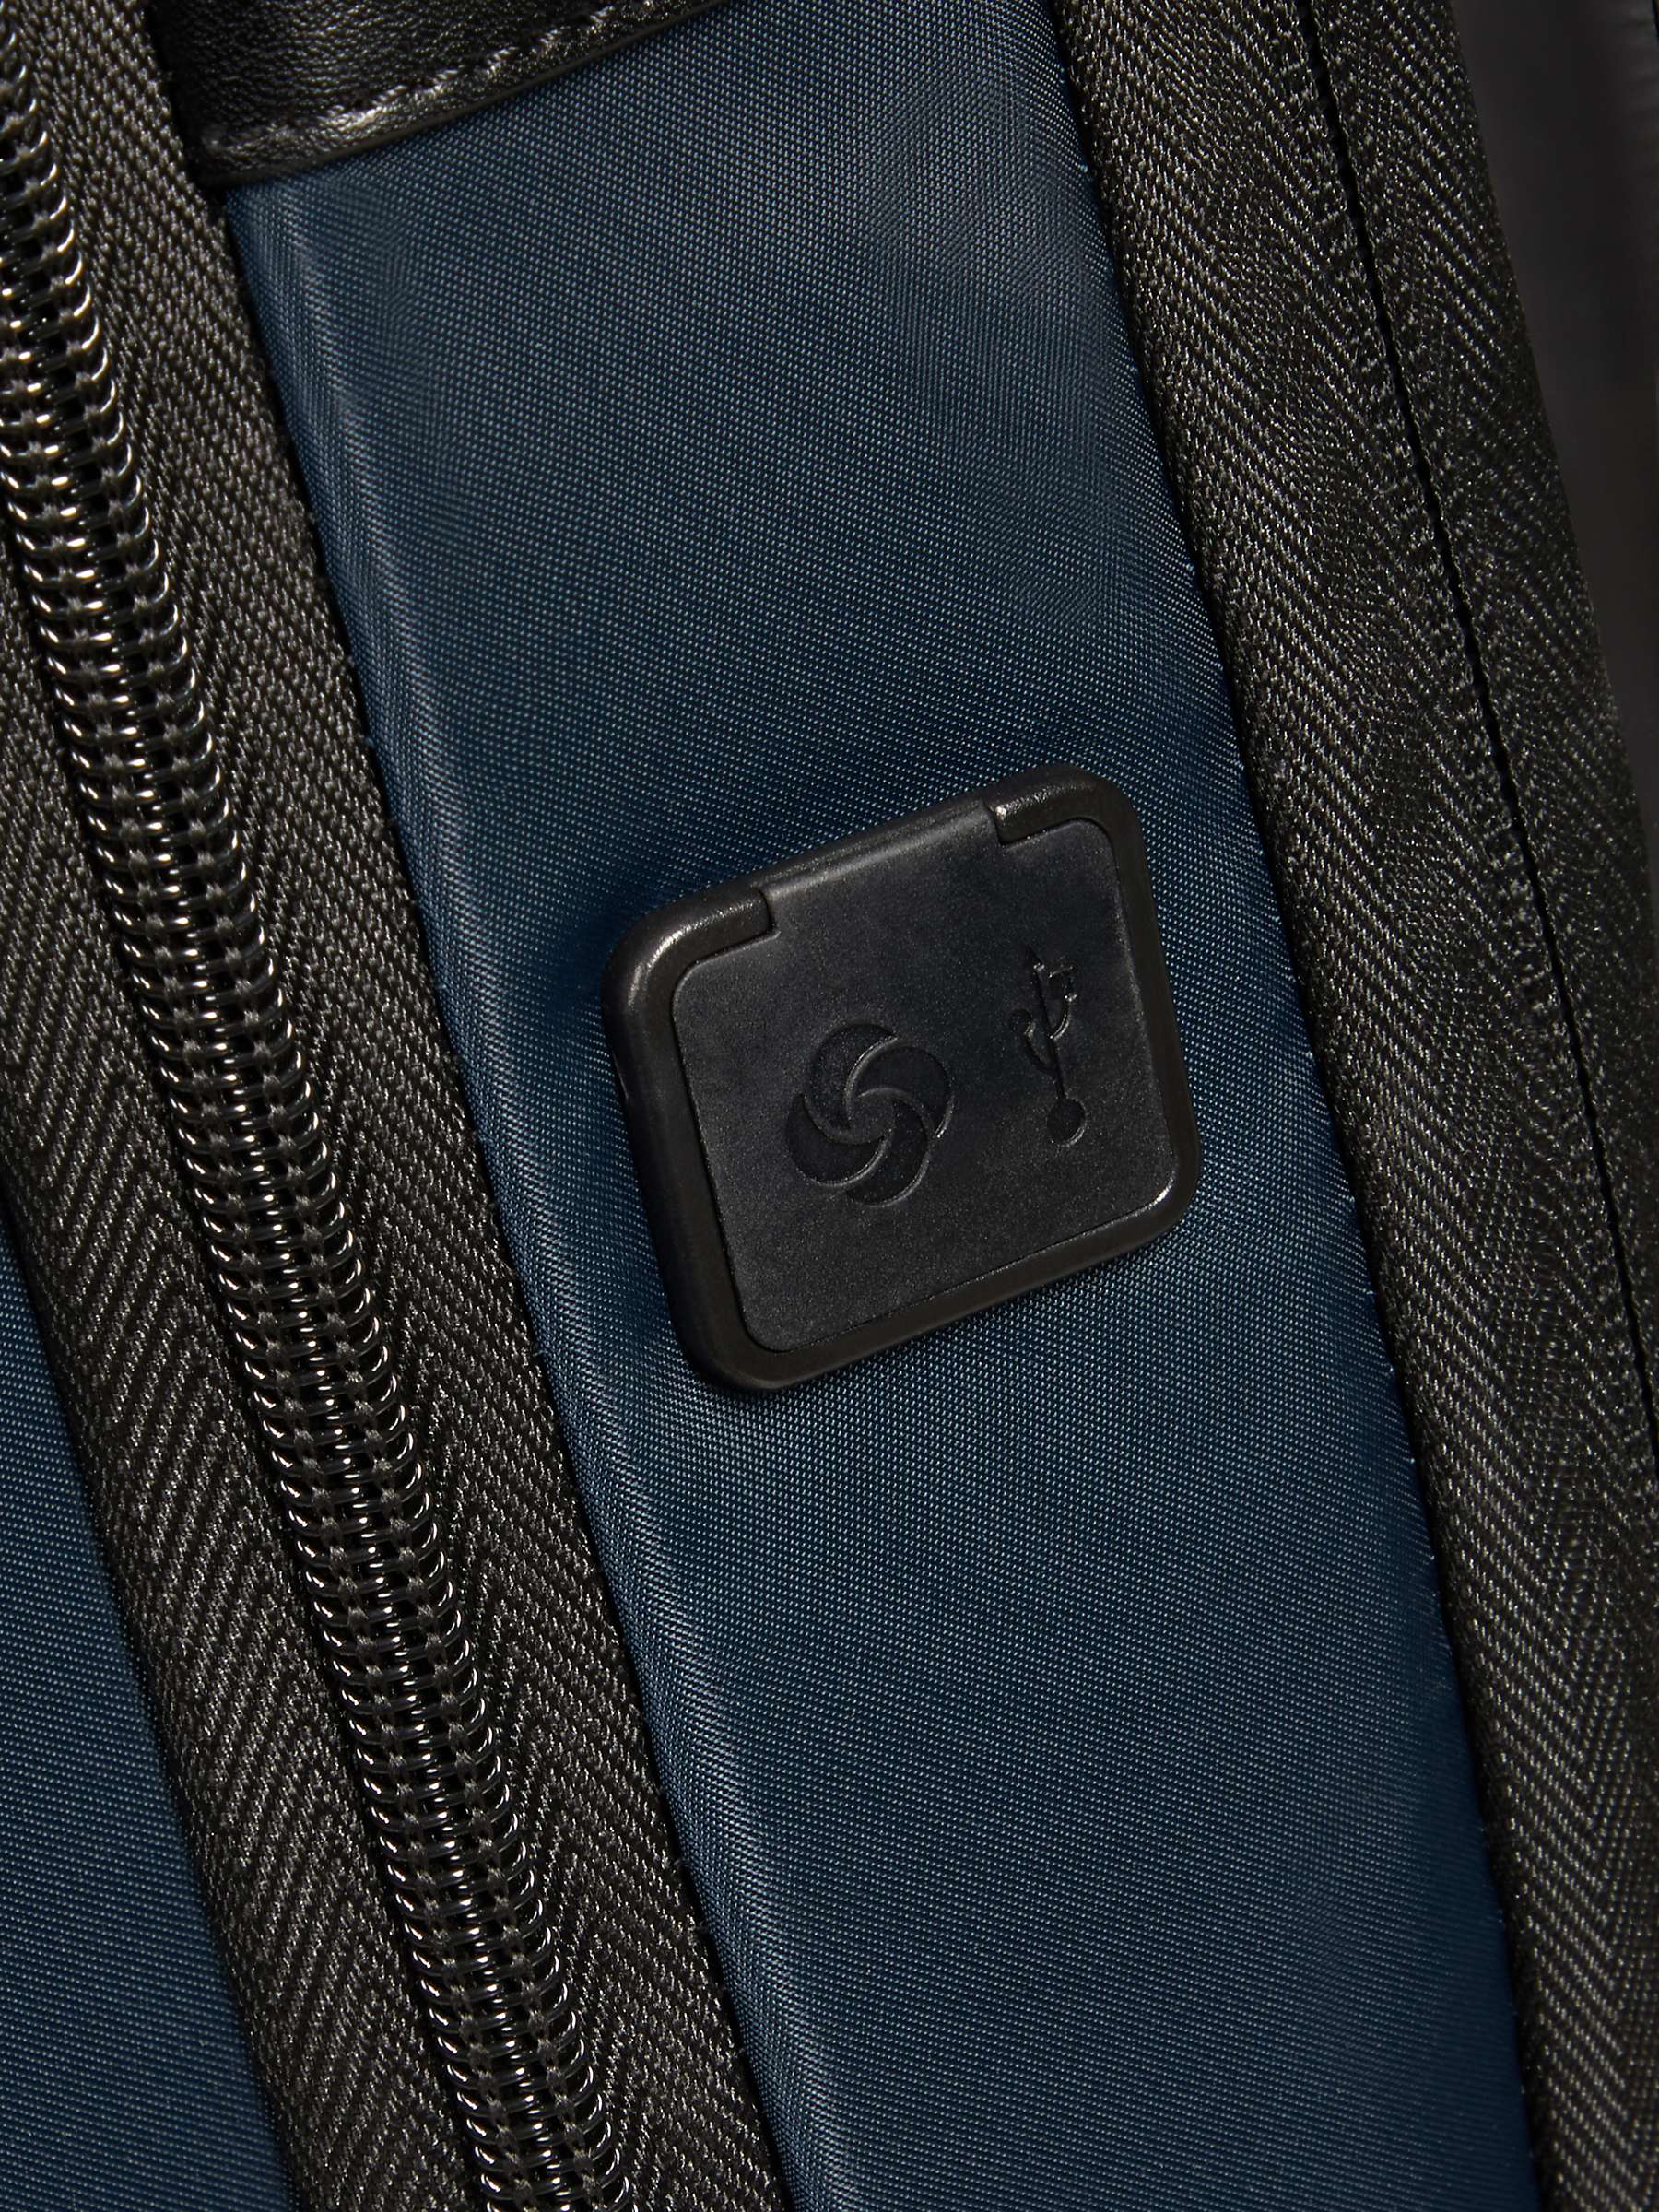 Buy Samsonite Openroad 2.0 15.6" Laptop Briefcase Online at johnlewis.com